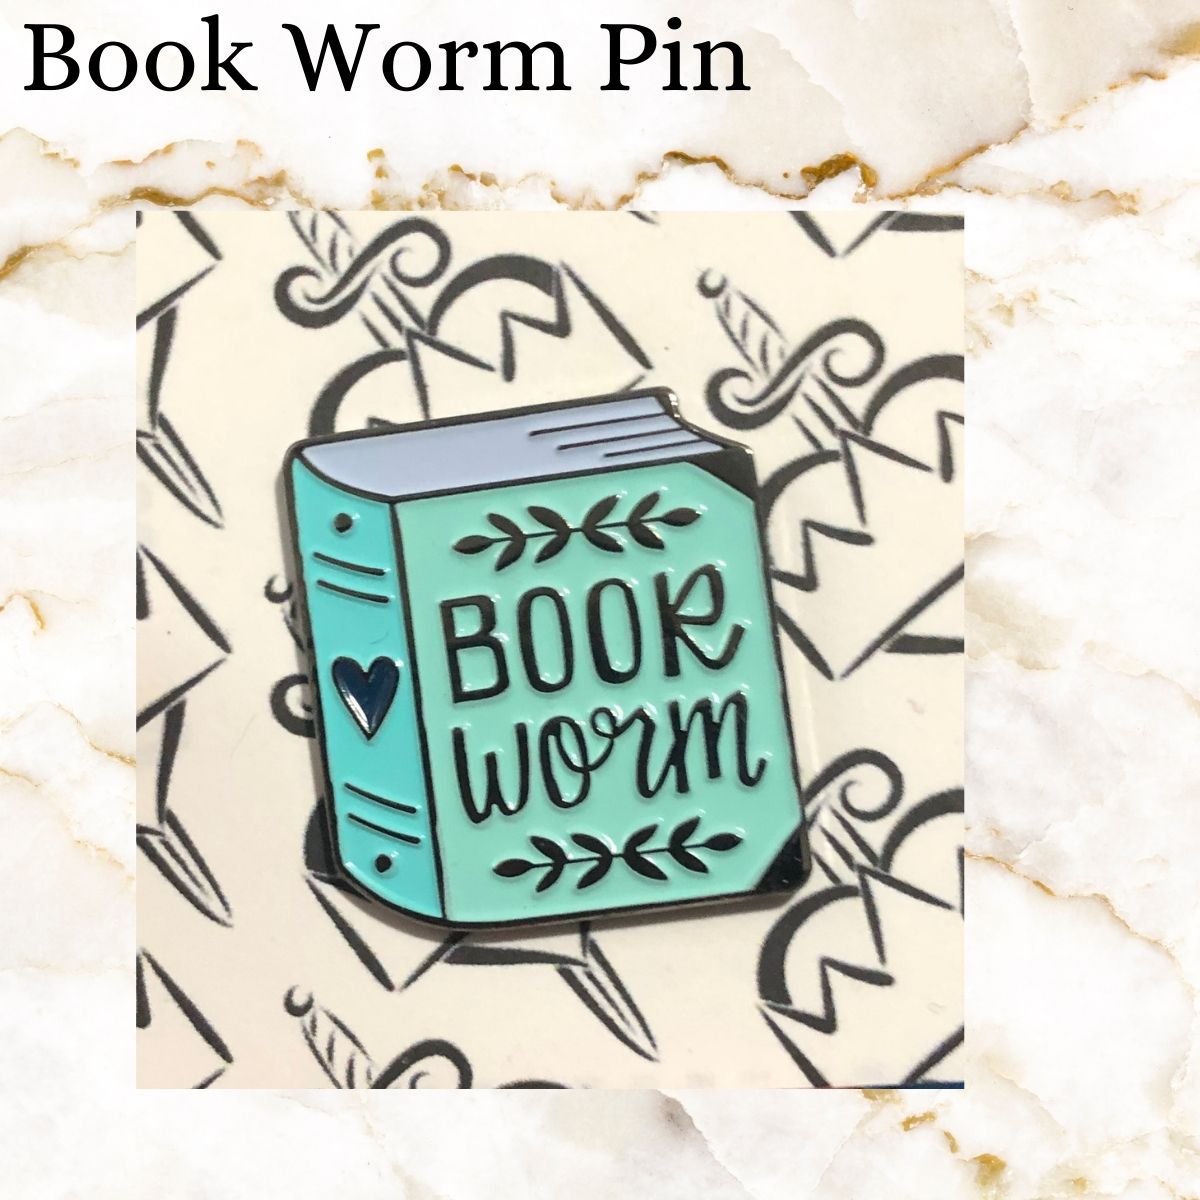 Book pin - greenish blue book - says Book Worm